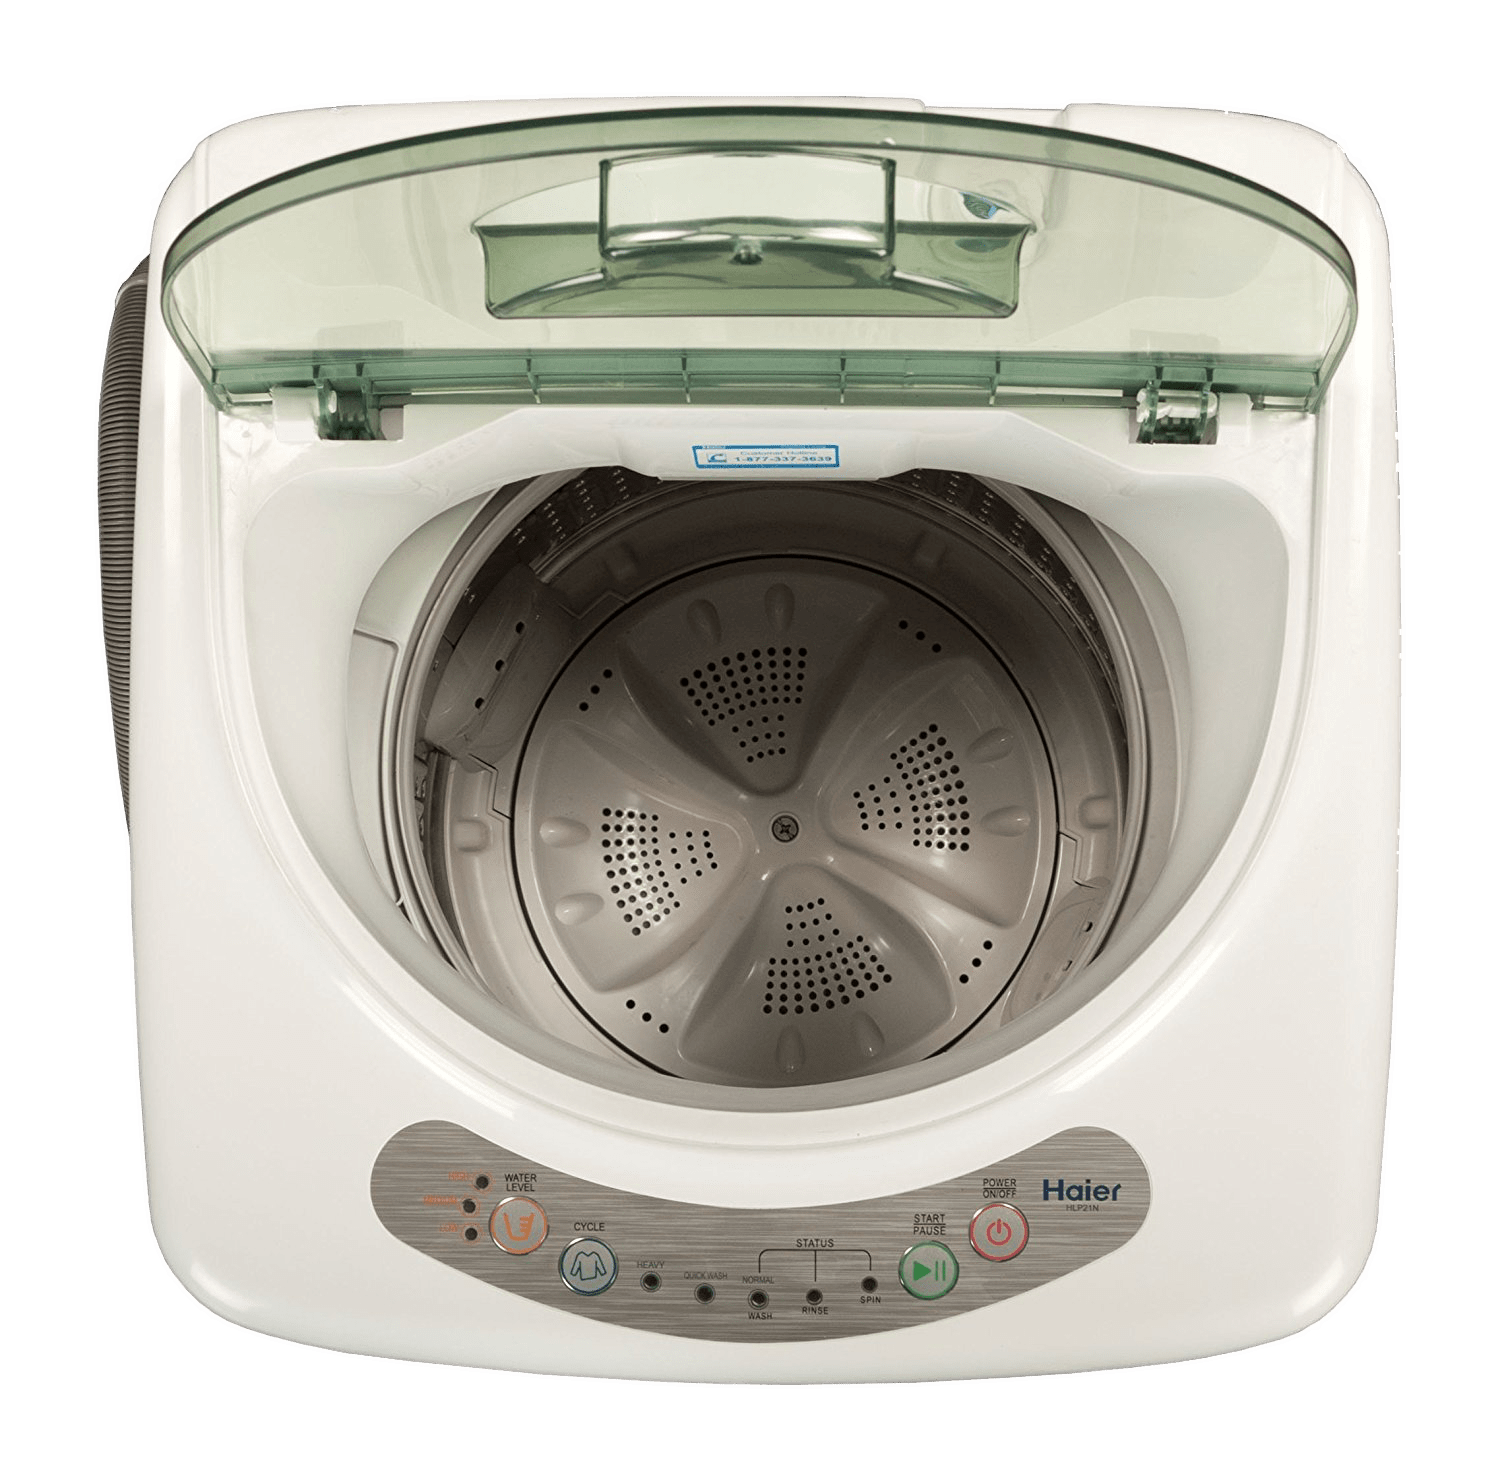 Washing Machine PNG High-Quality Image